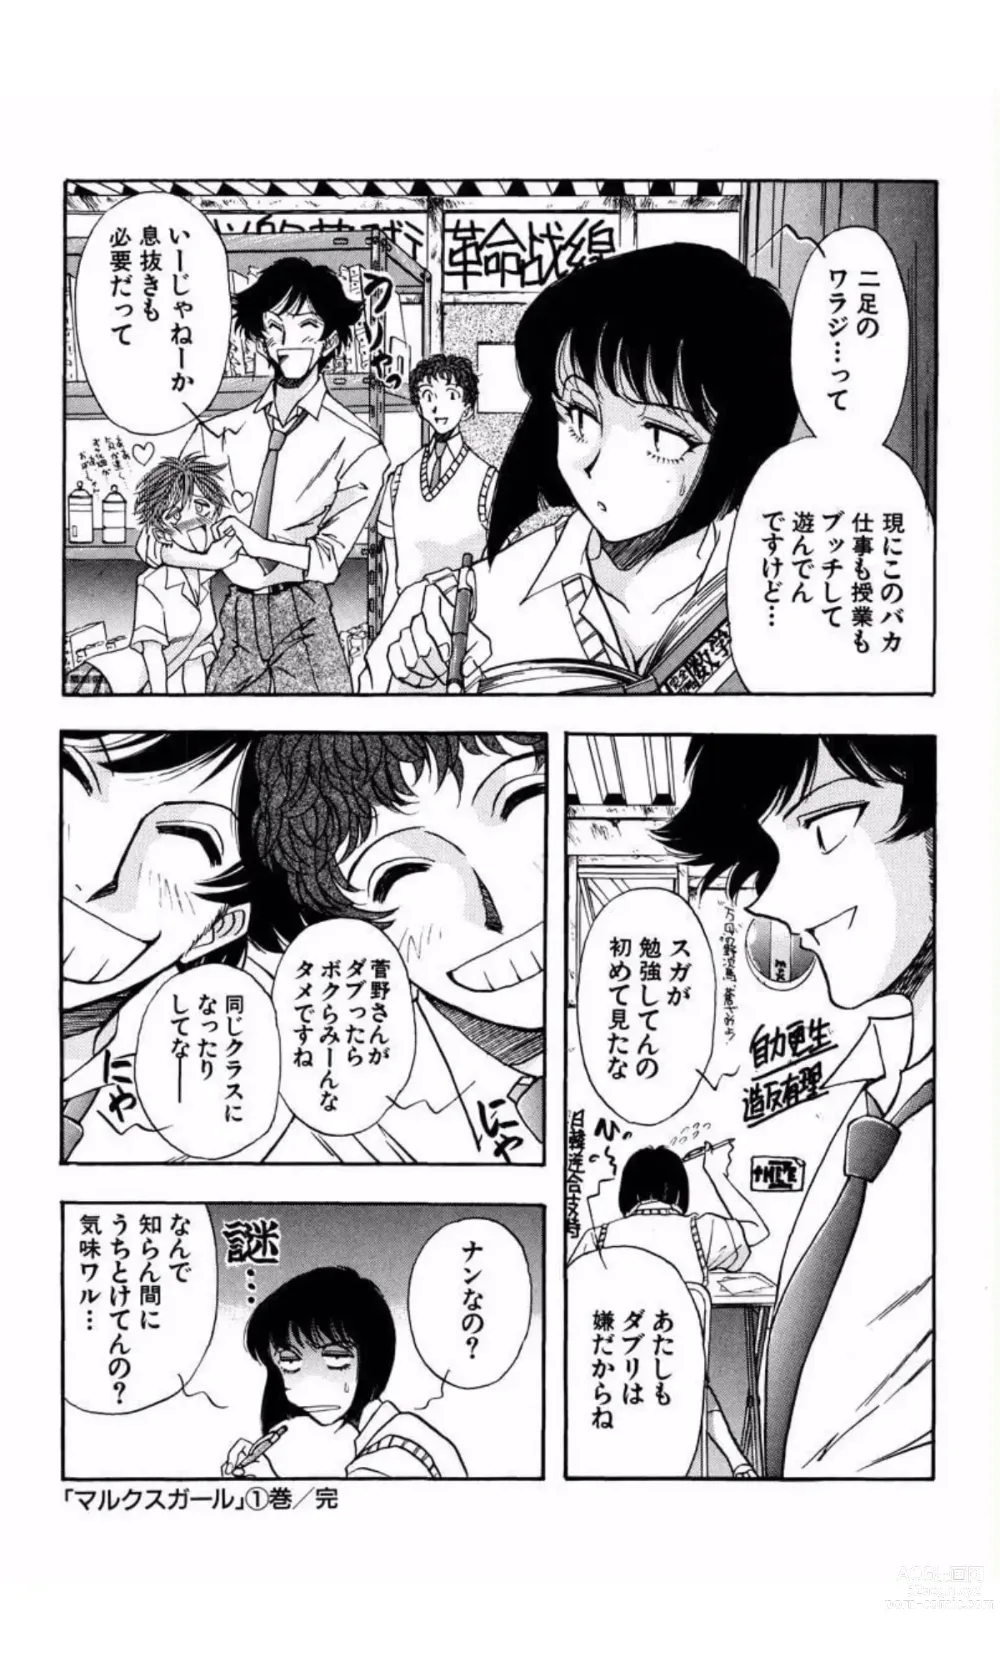 Page 207 of manga MARX GIRL